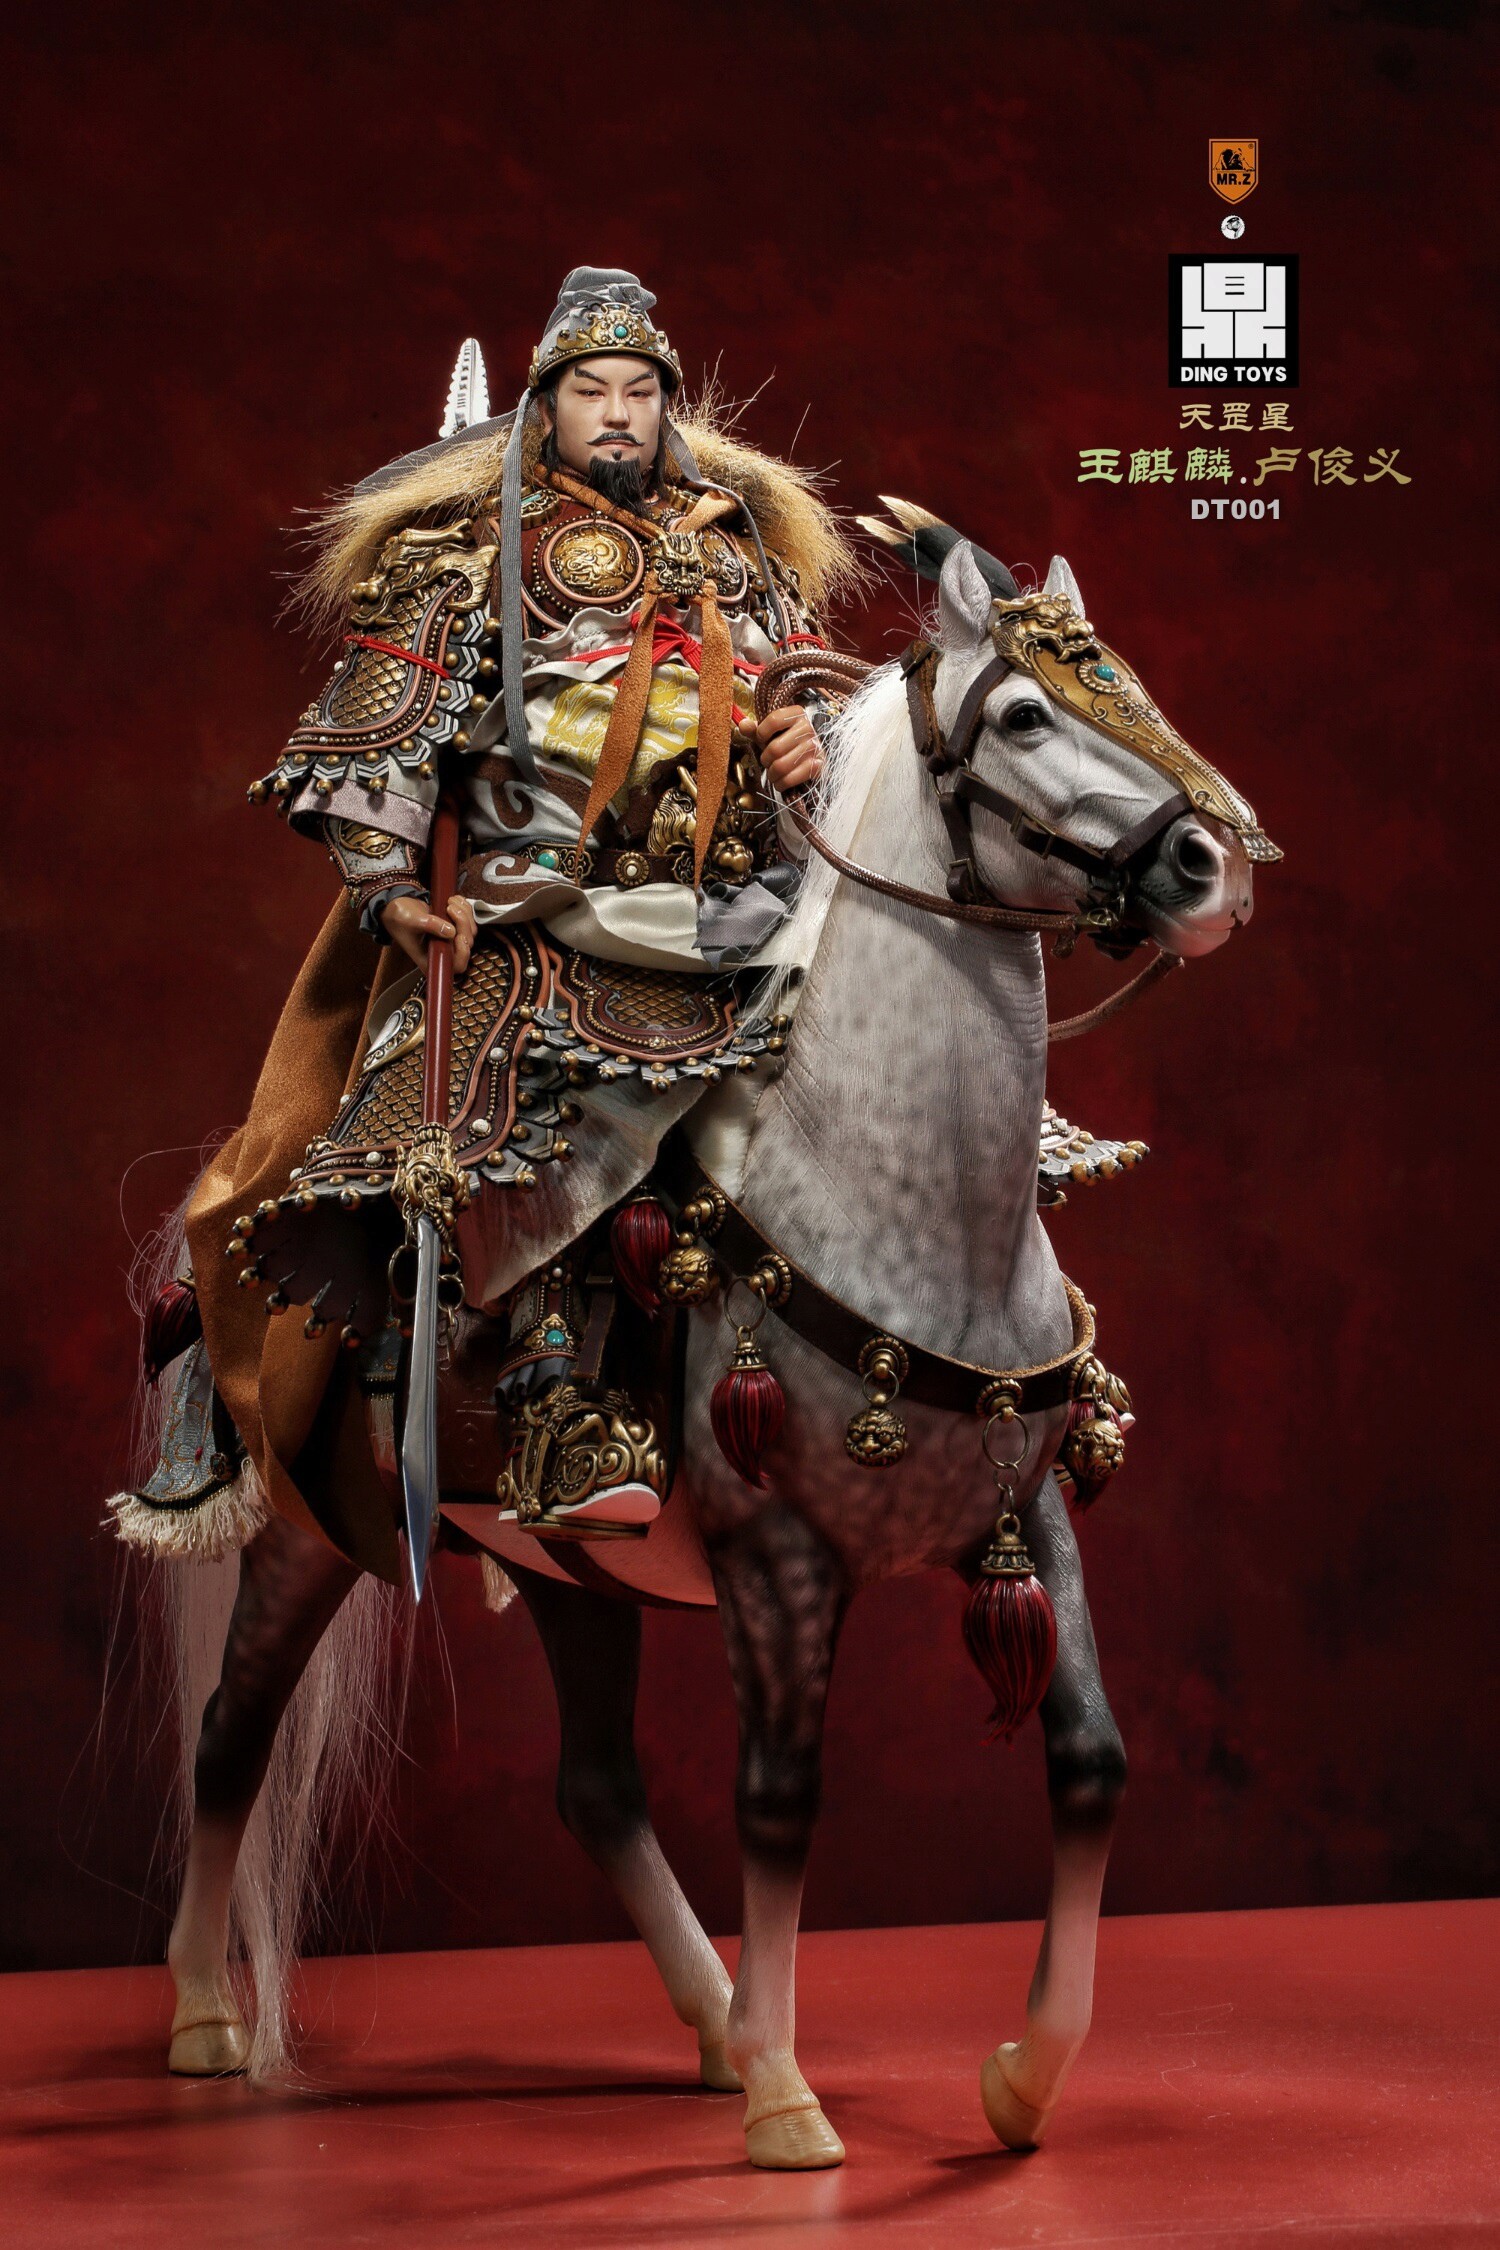 DingToys - NEW PRODUCT: Mr.Z X DING TOYS - Tiangang Star Jade Qilin-Lu Junyi / war horse Qilin beast #DT001 0561